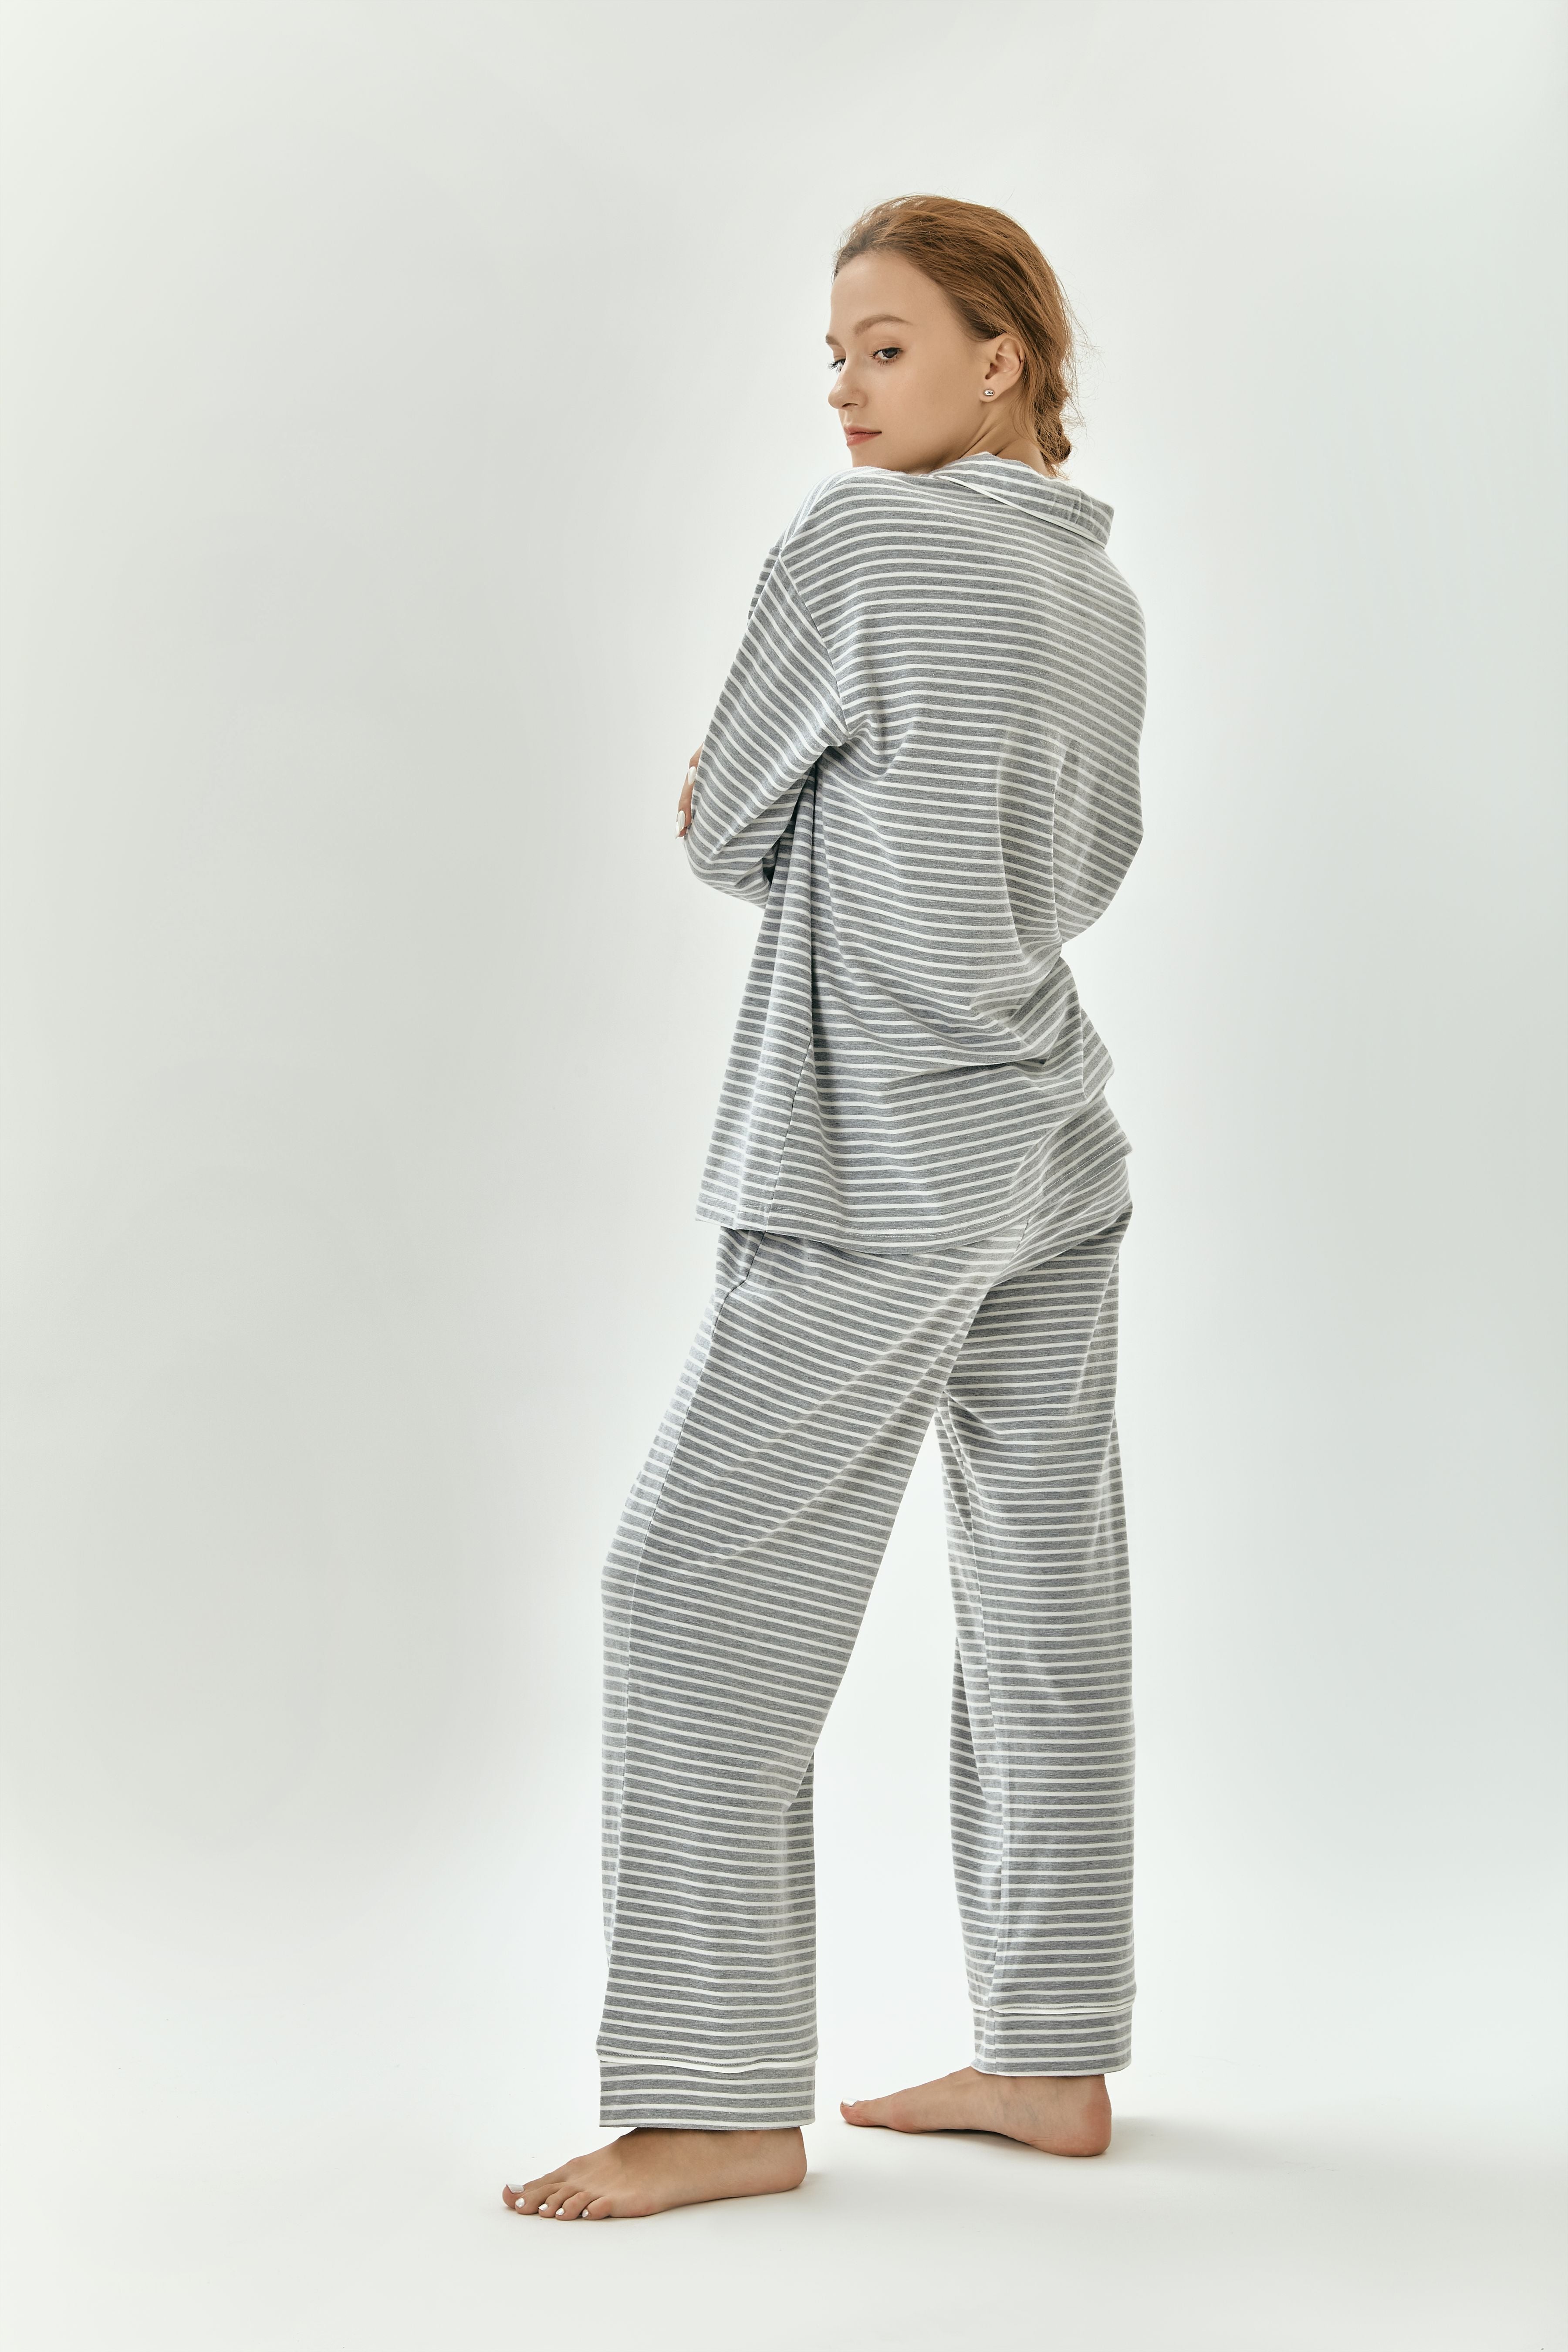 [Clearance Sale] NomadBasic Women's Light Grey Knitted Loungewear Set